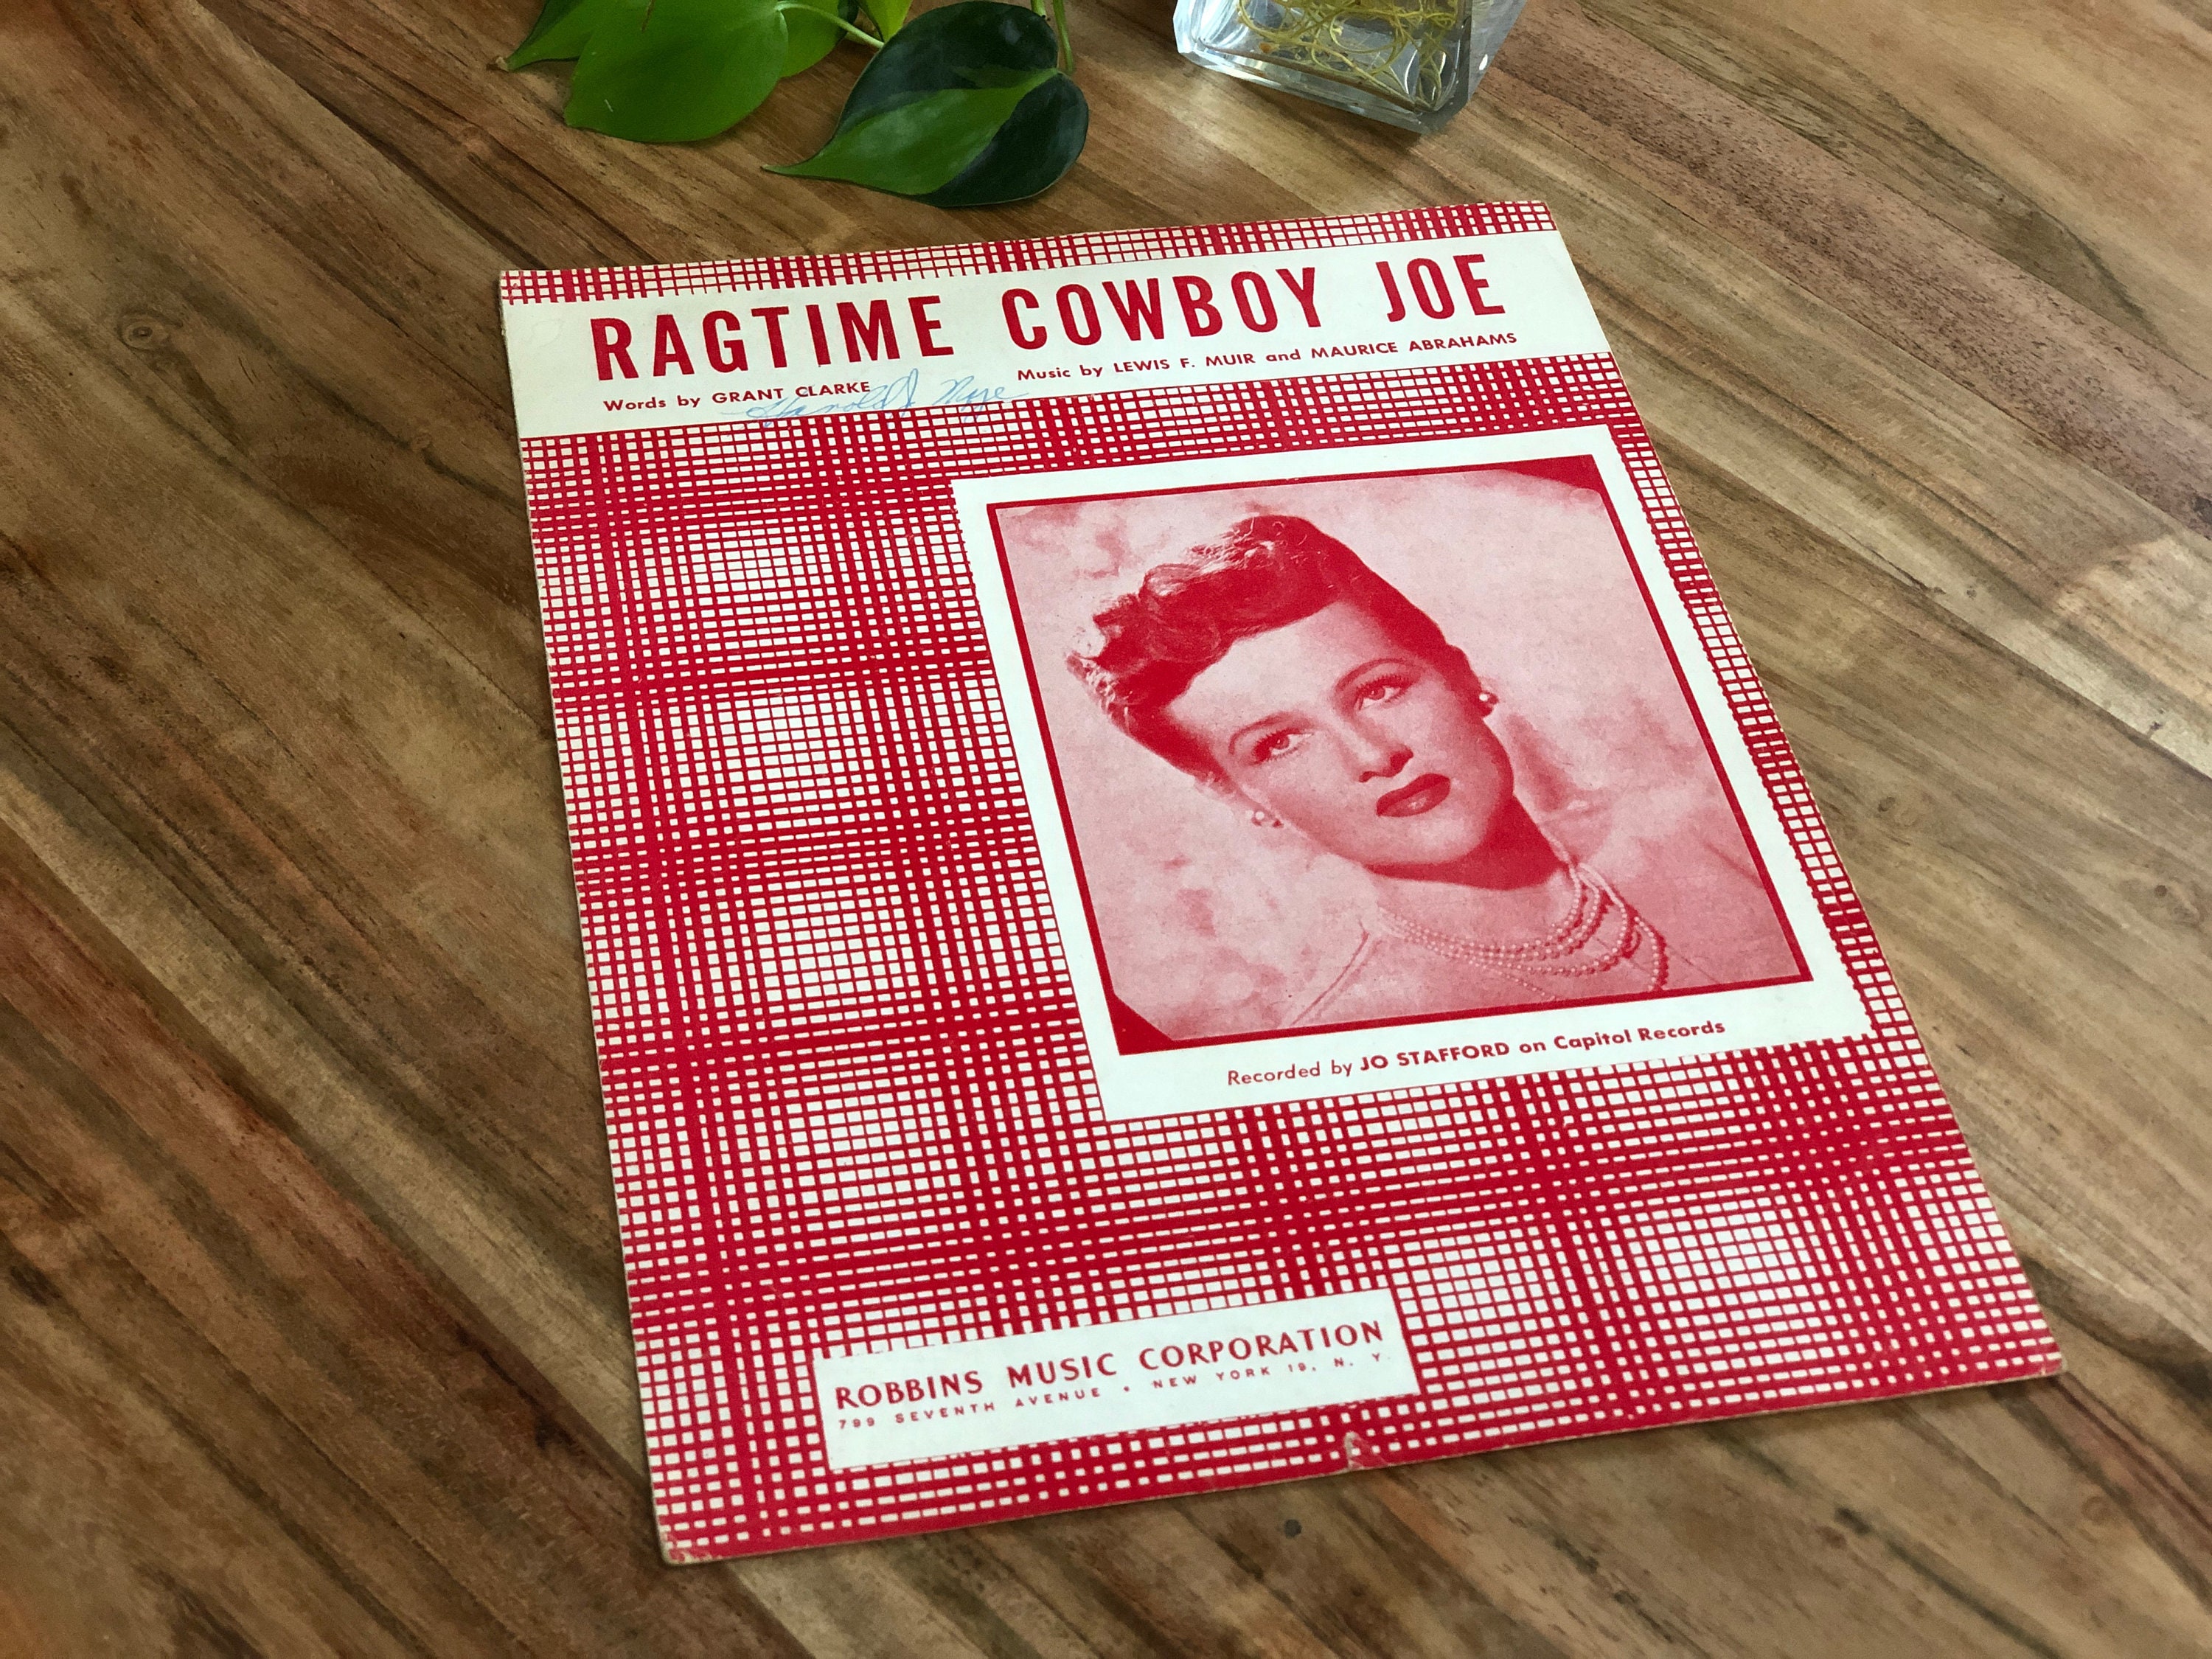 Ragtime Cowboy Joe Song Clarke Muir Abrahams Jo Stafford | Etsy